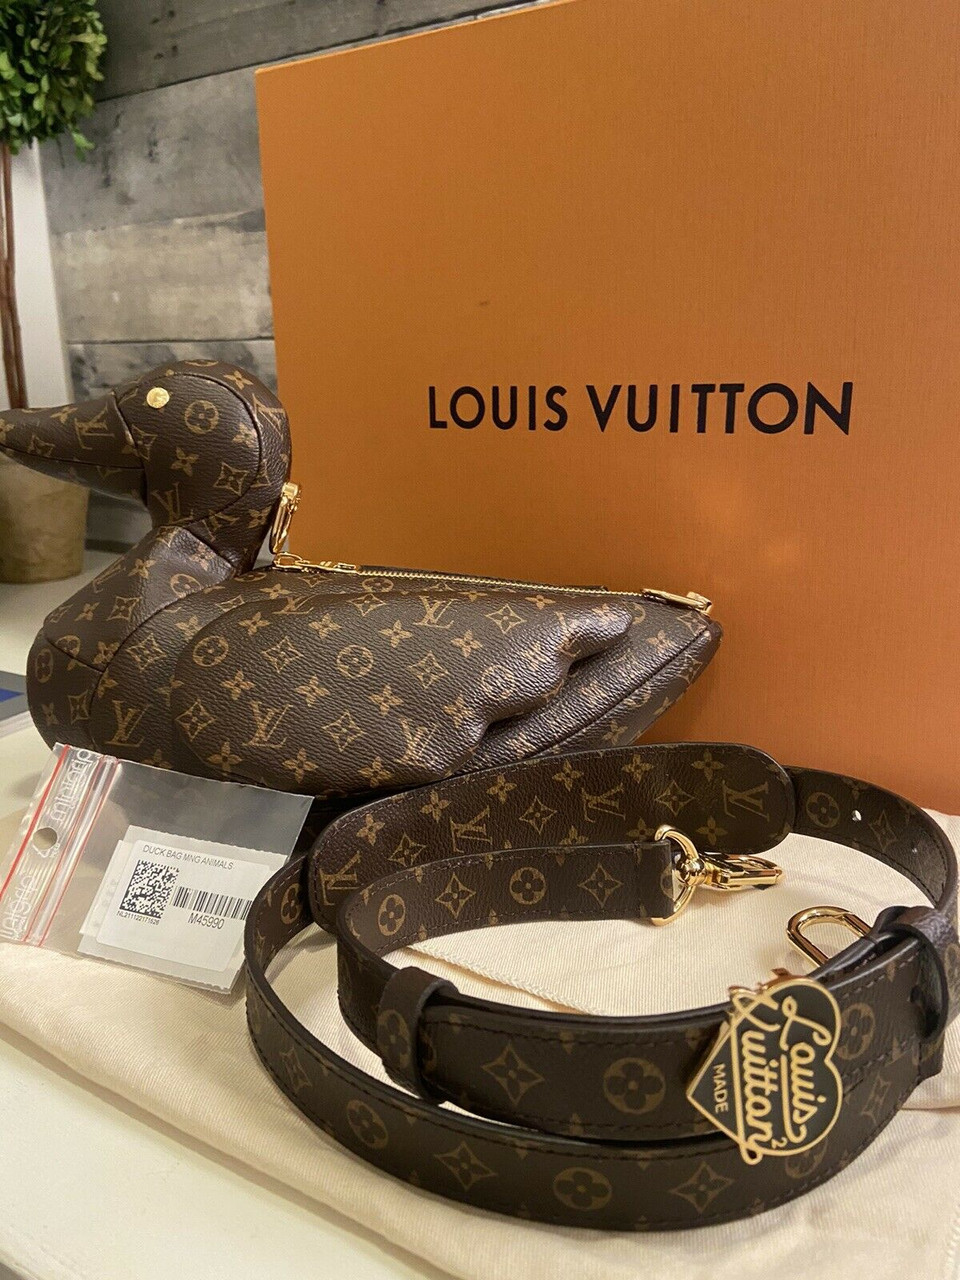 NEW Authentic Louis Vuitton Limited Edition LV x Nigo Gift Bag  15.75x13.5x6.25